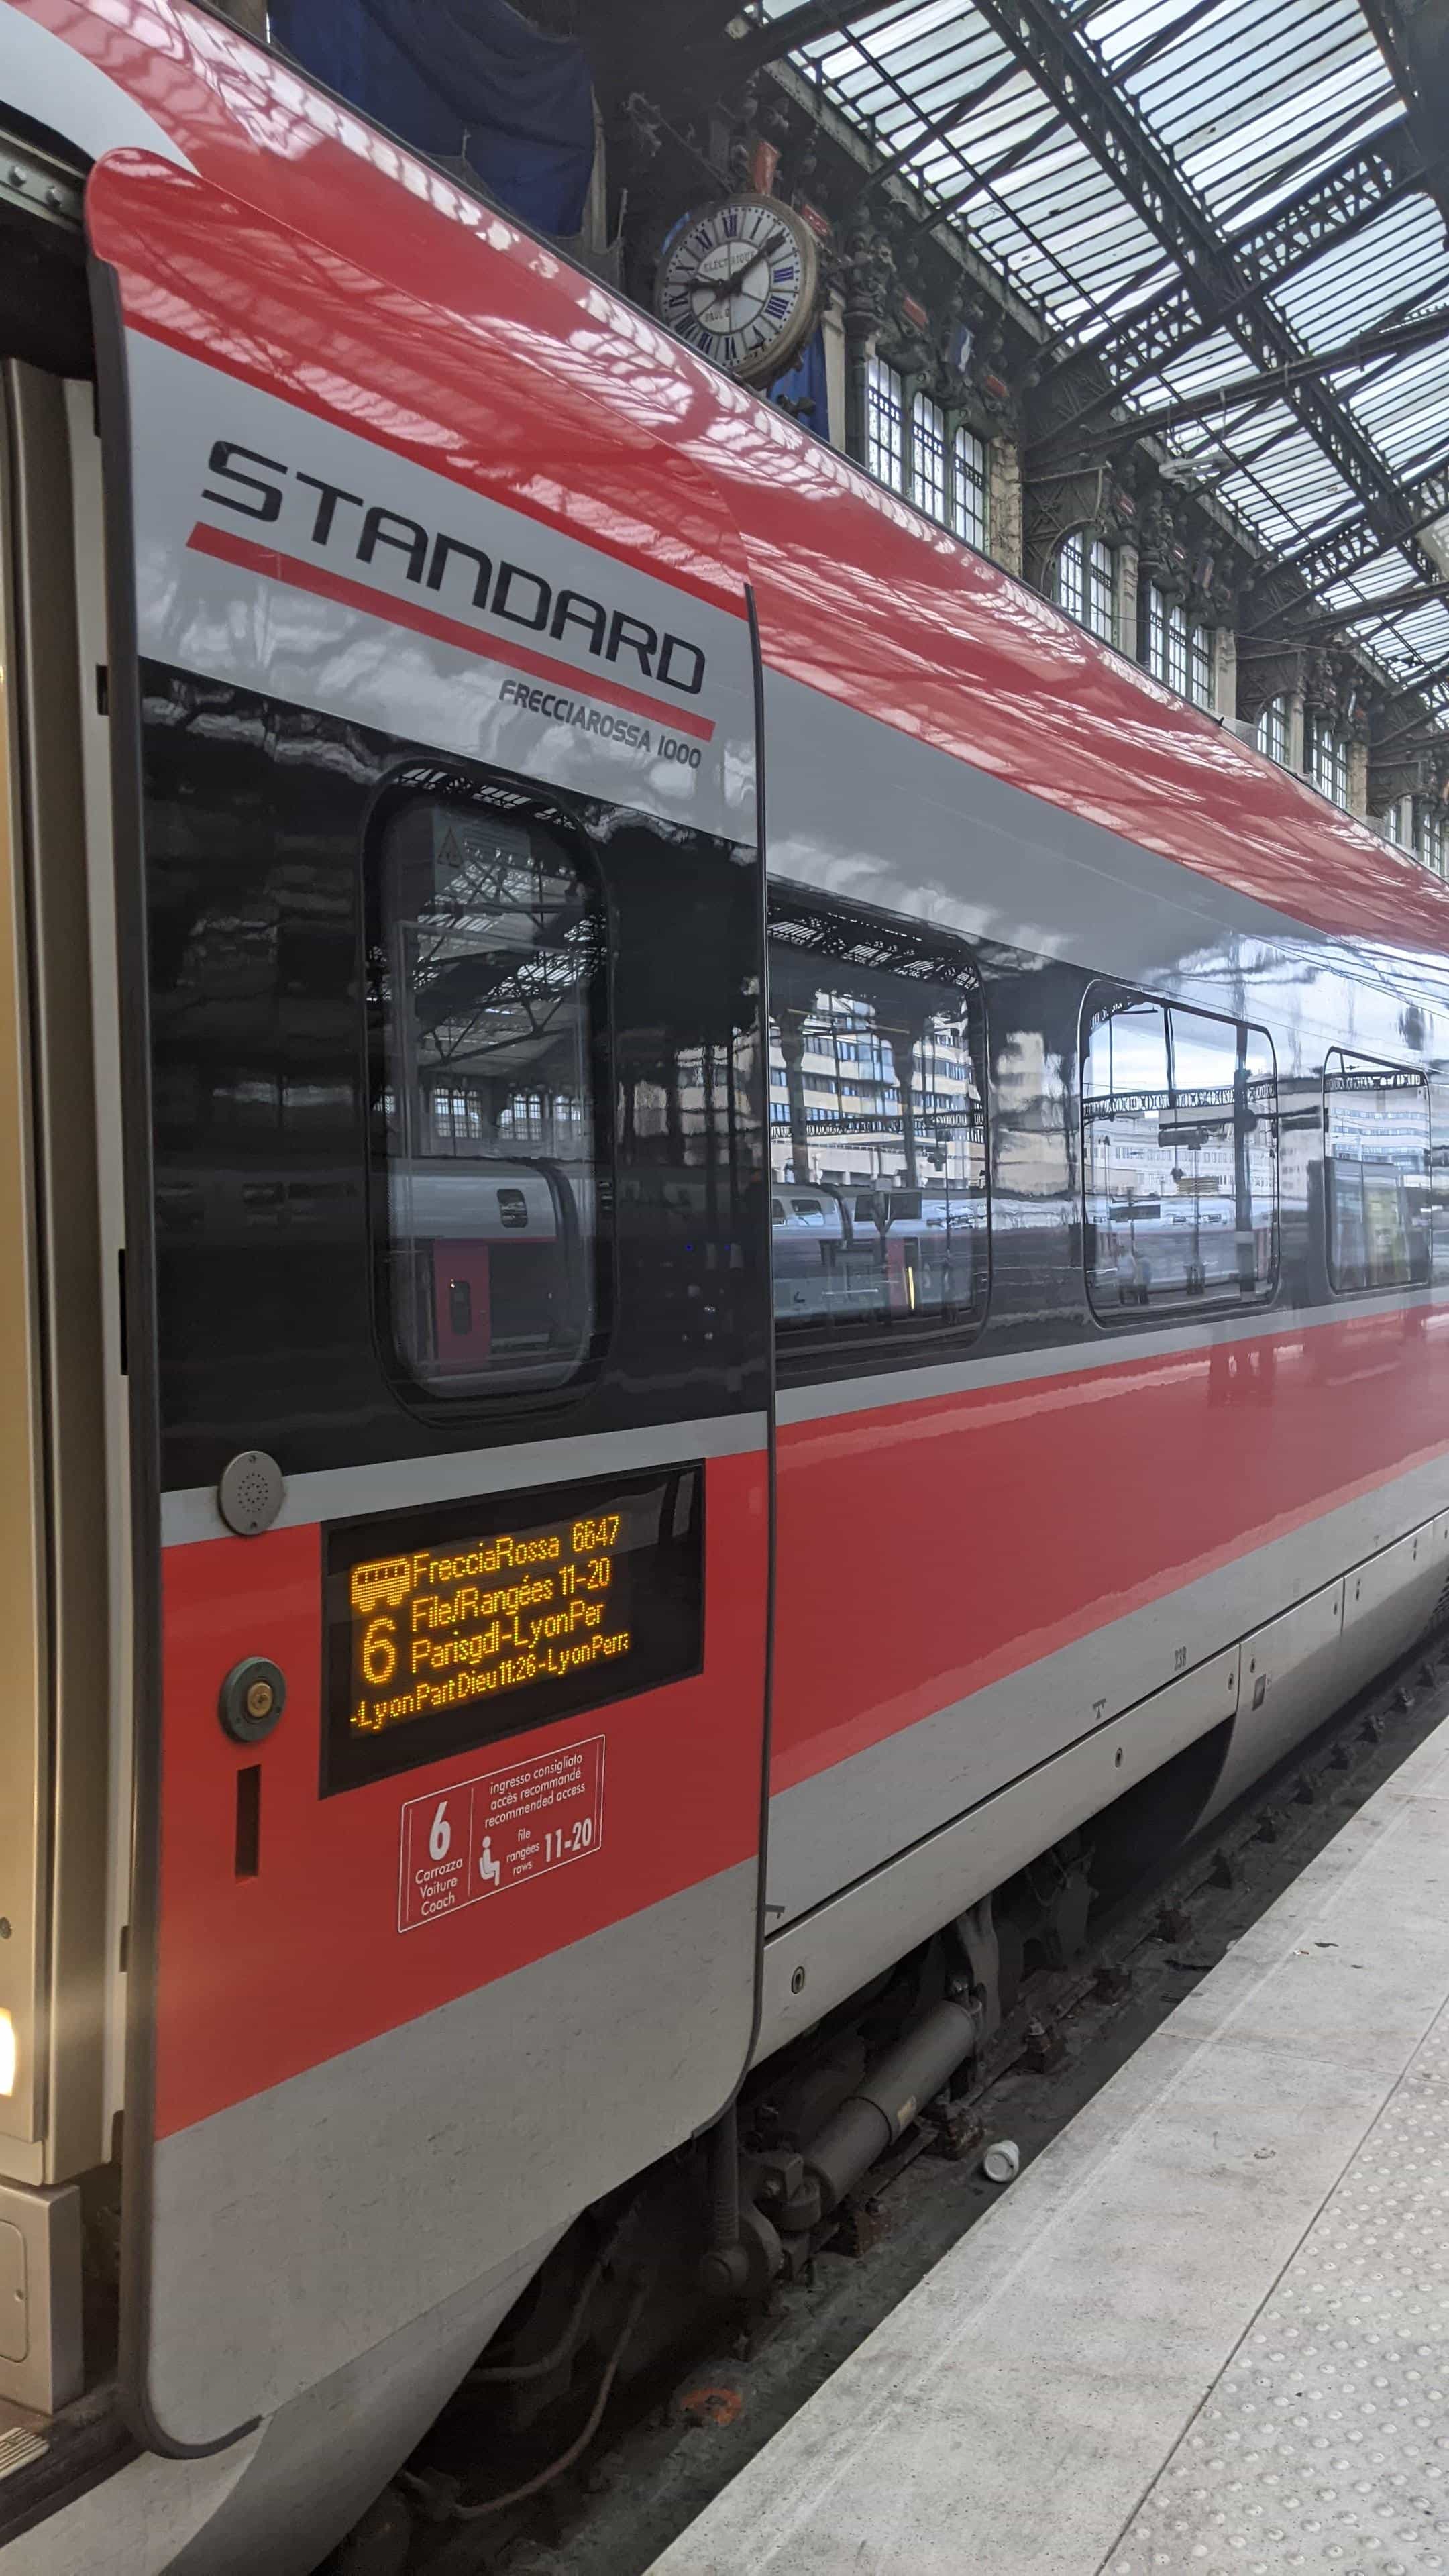 Exterior of carriage 6 on Trenitalia Frecciarossa train sitting at platform at Paris Gare de Lyon